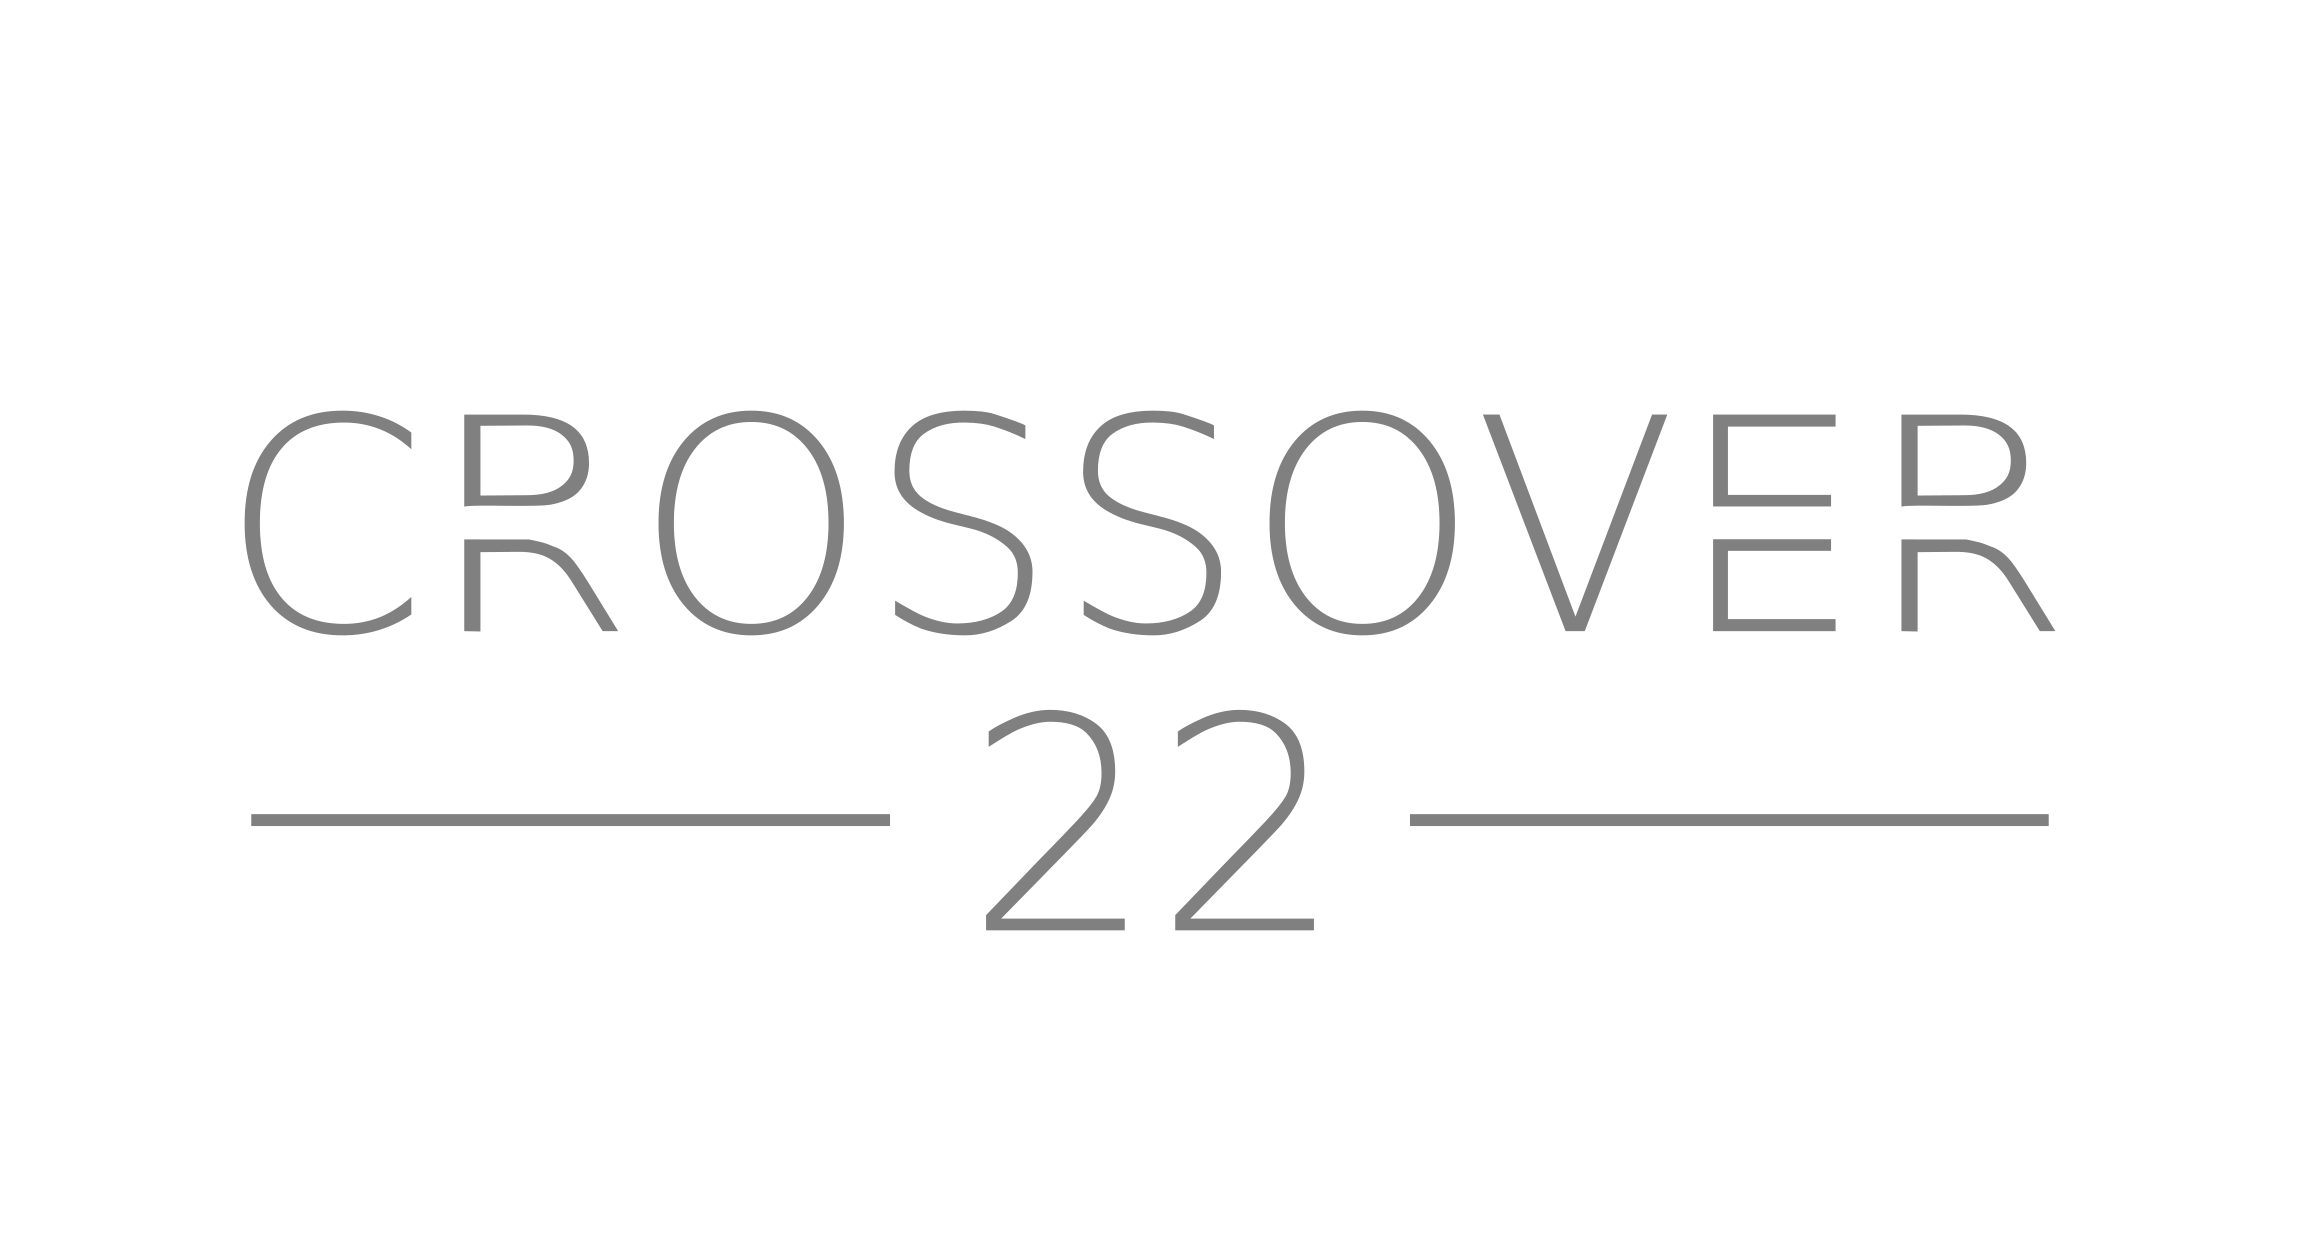 Crossover 22